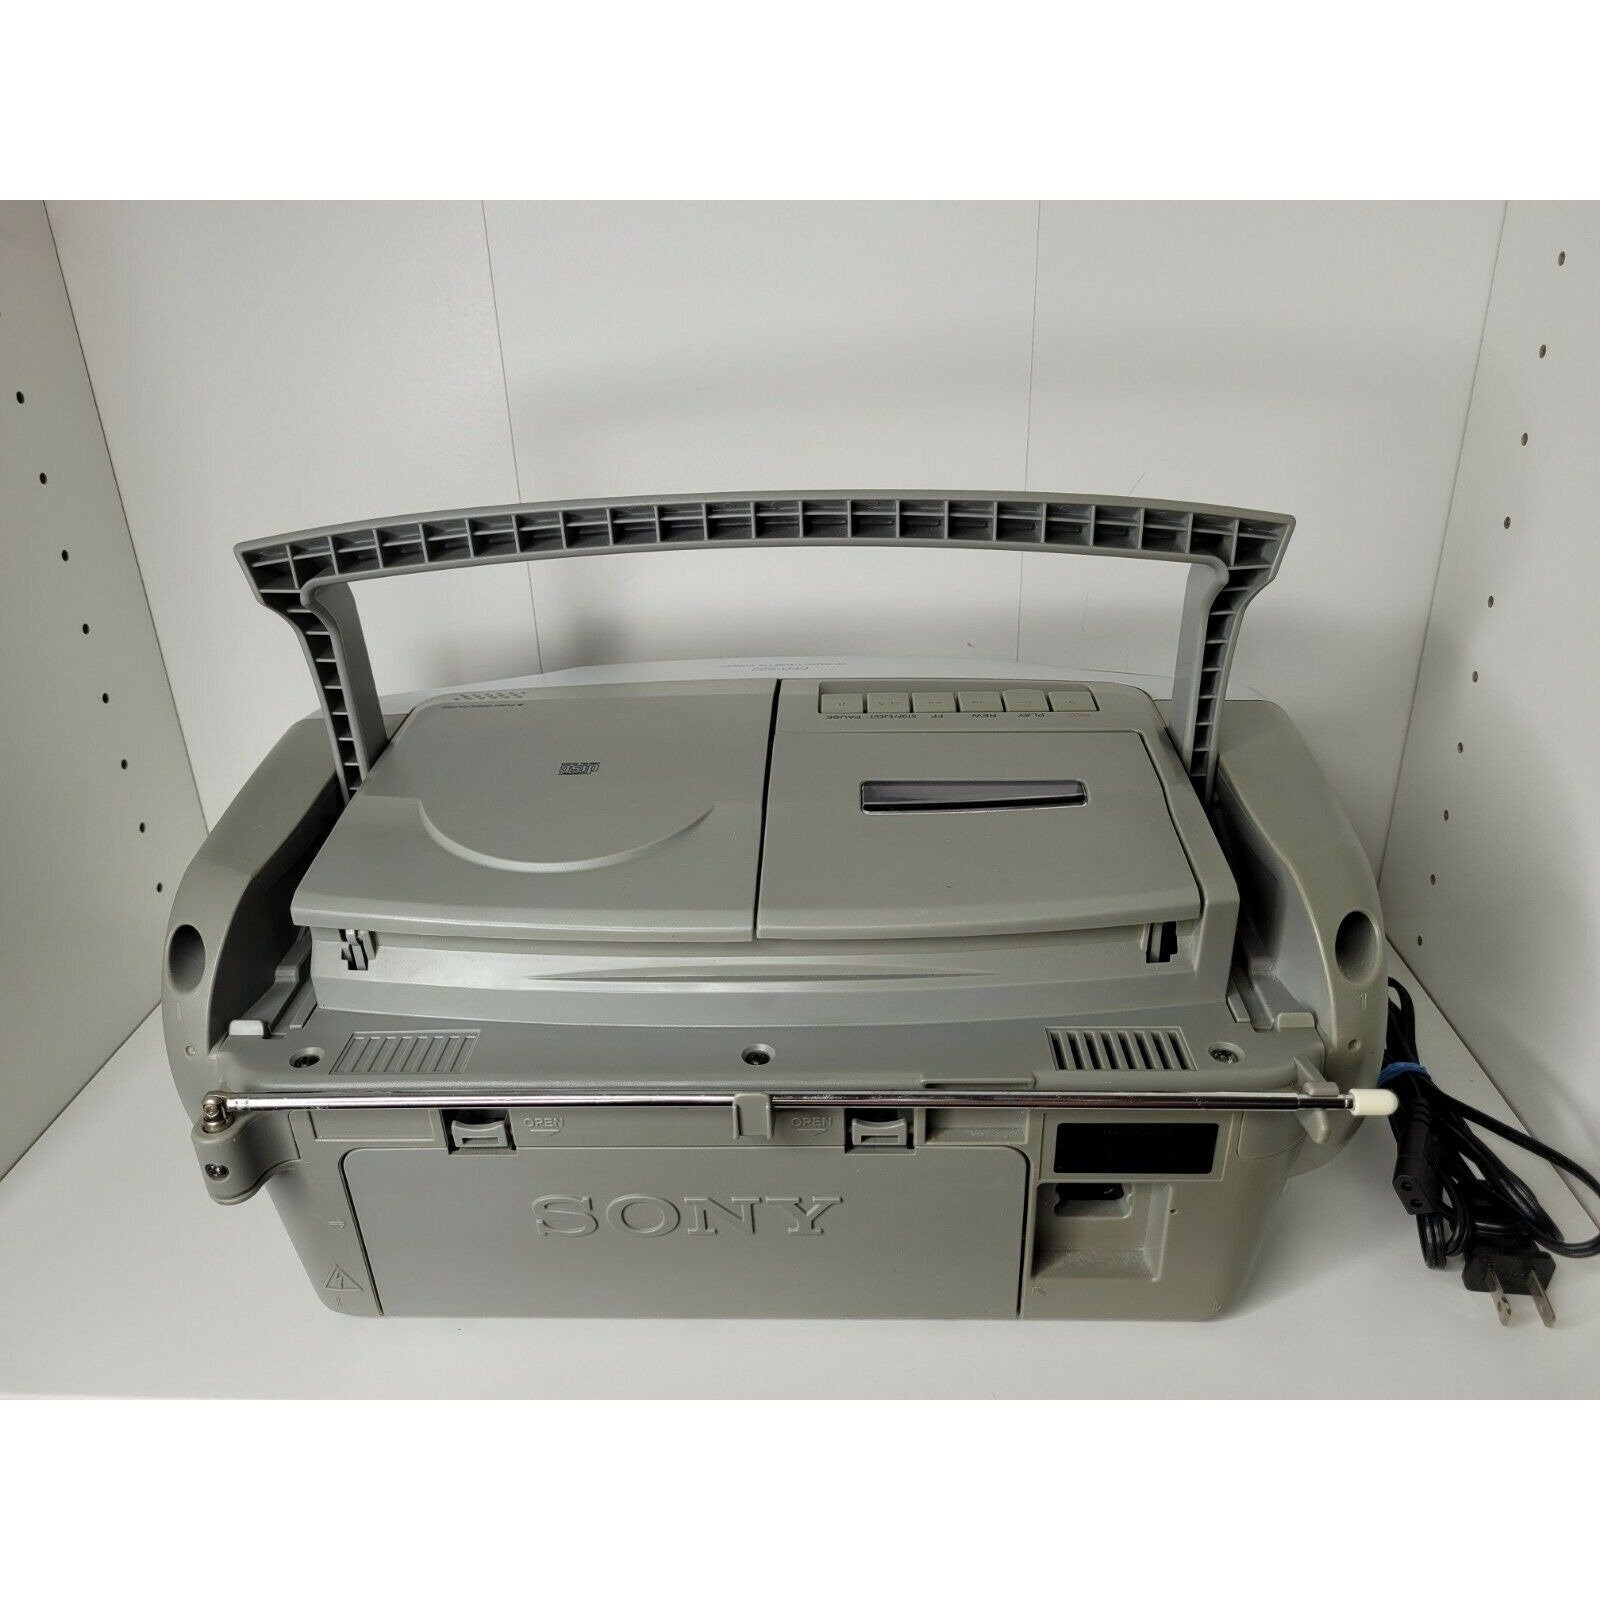 Sony Cfd-S22 Mega Bass CD Player AM FM Radio Cassette Boombox